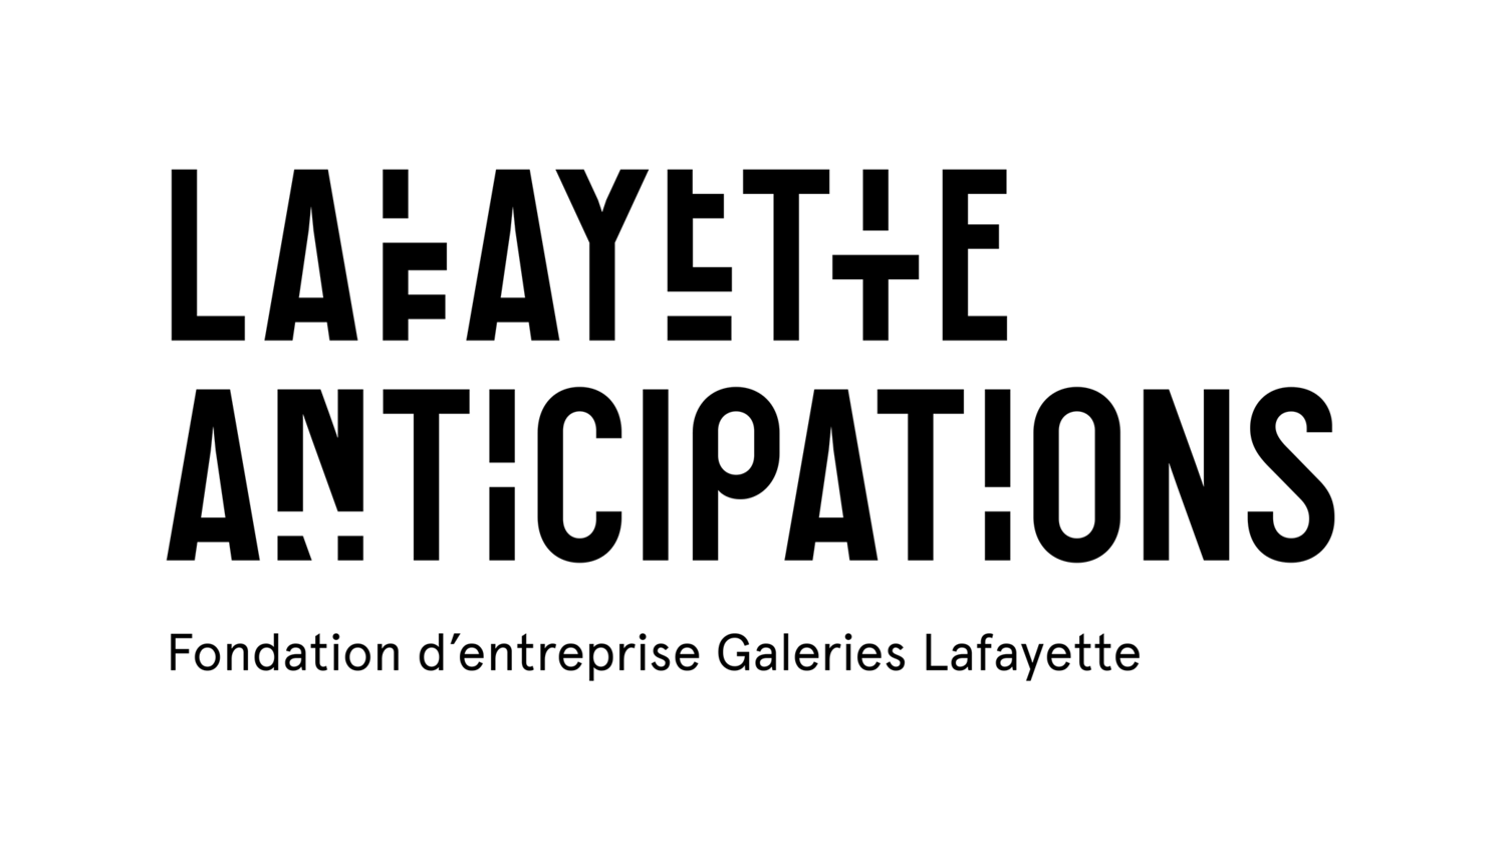 galeries lafayette logo